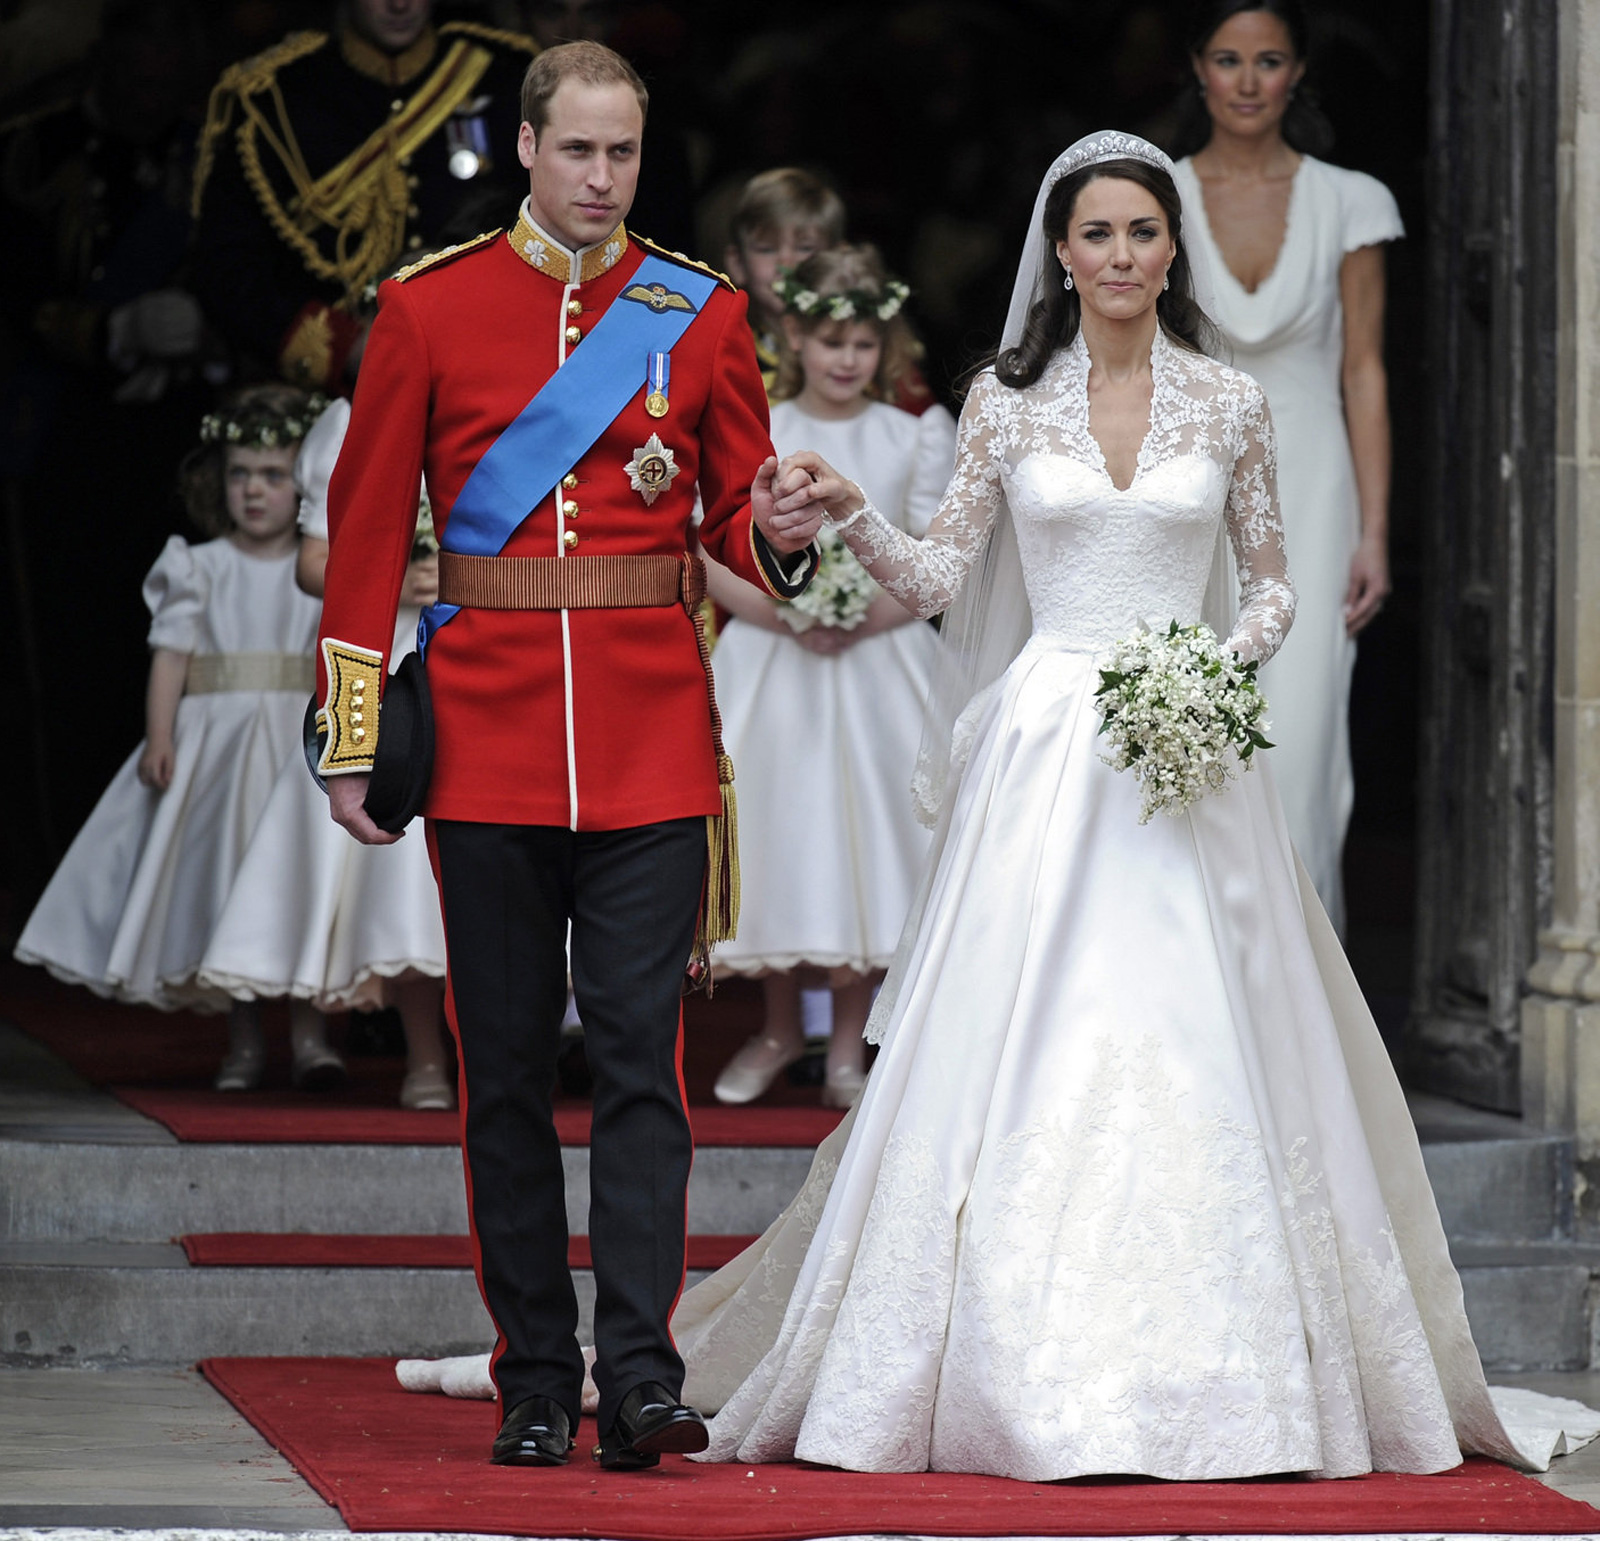 HQ Images 4 U: Prince William and Catherine Middleton Wedding on 29 ...